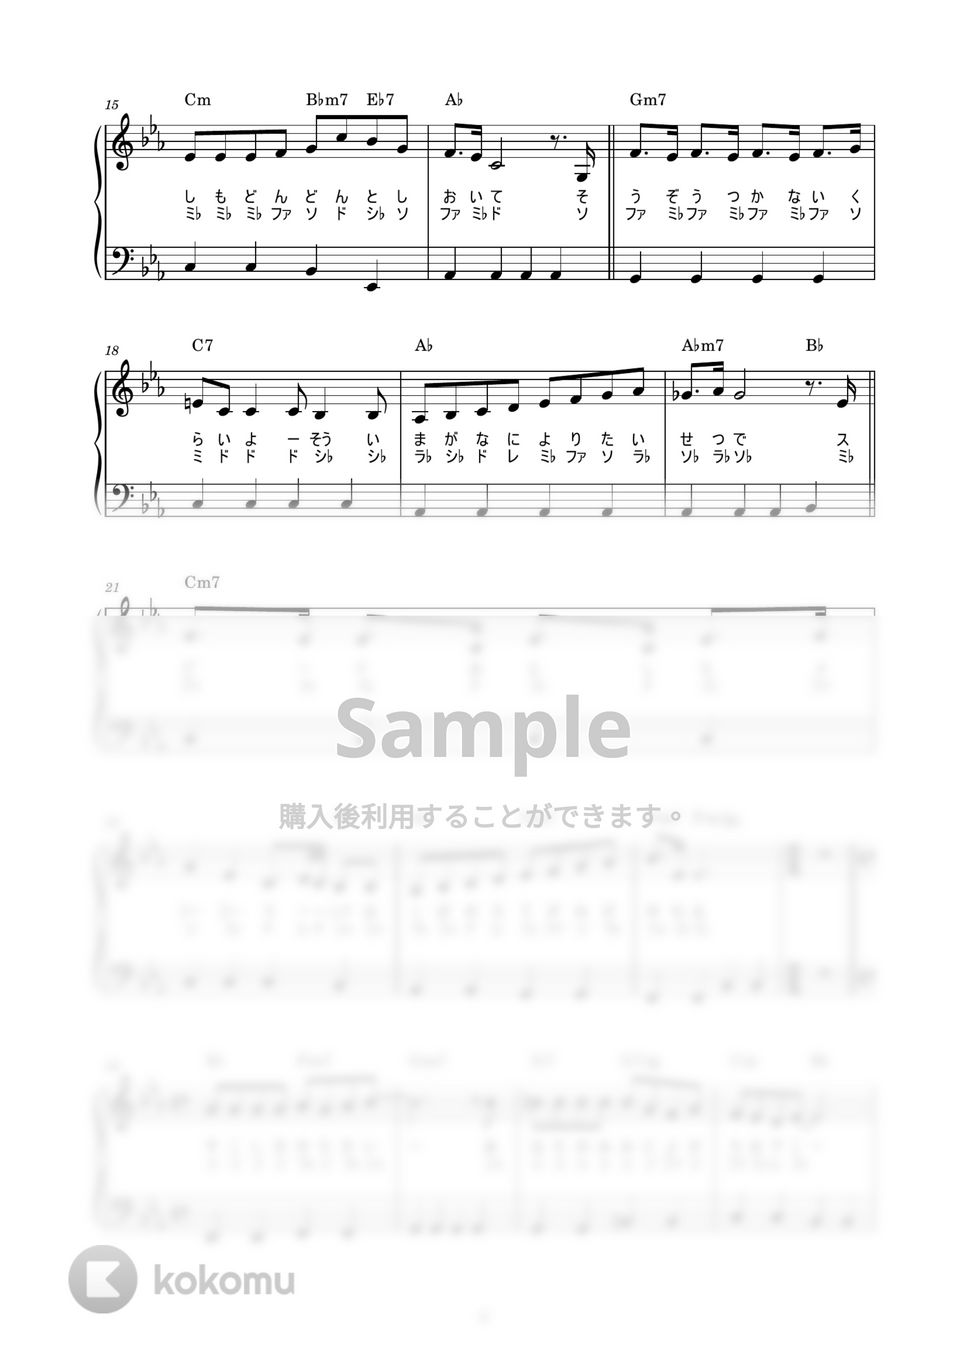 aiko - カブトムシ (かんたん / 歌詞付き / ドレミ付き / 初心者) by piano.tokyo